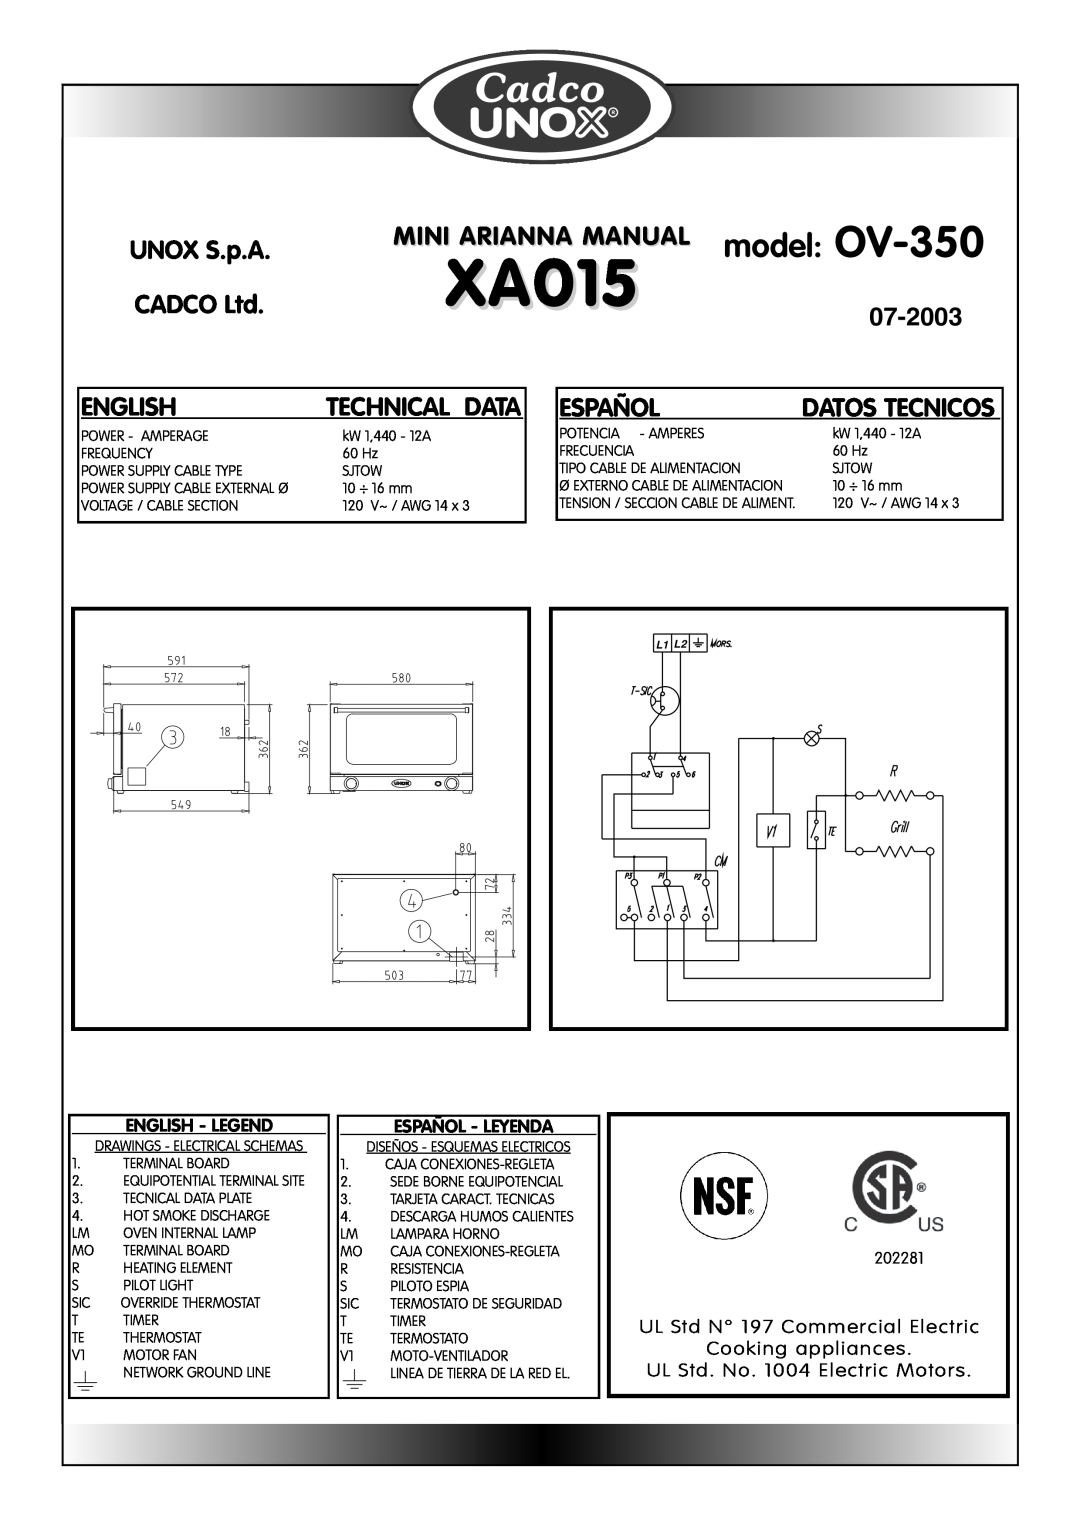 Cadco OV-250 model OV-350, XA015, UNOX S.p.A, Mini Arianna Manual, 07-2003, English, Español, Technical Data, 202281 